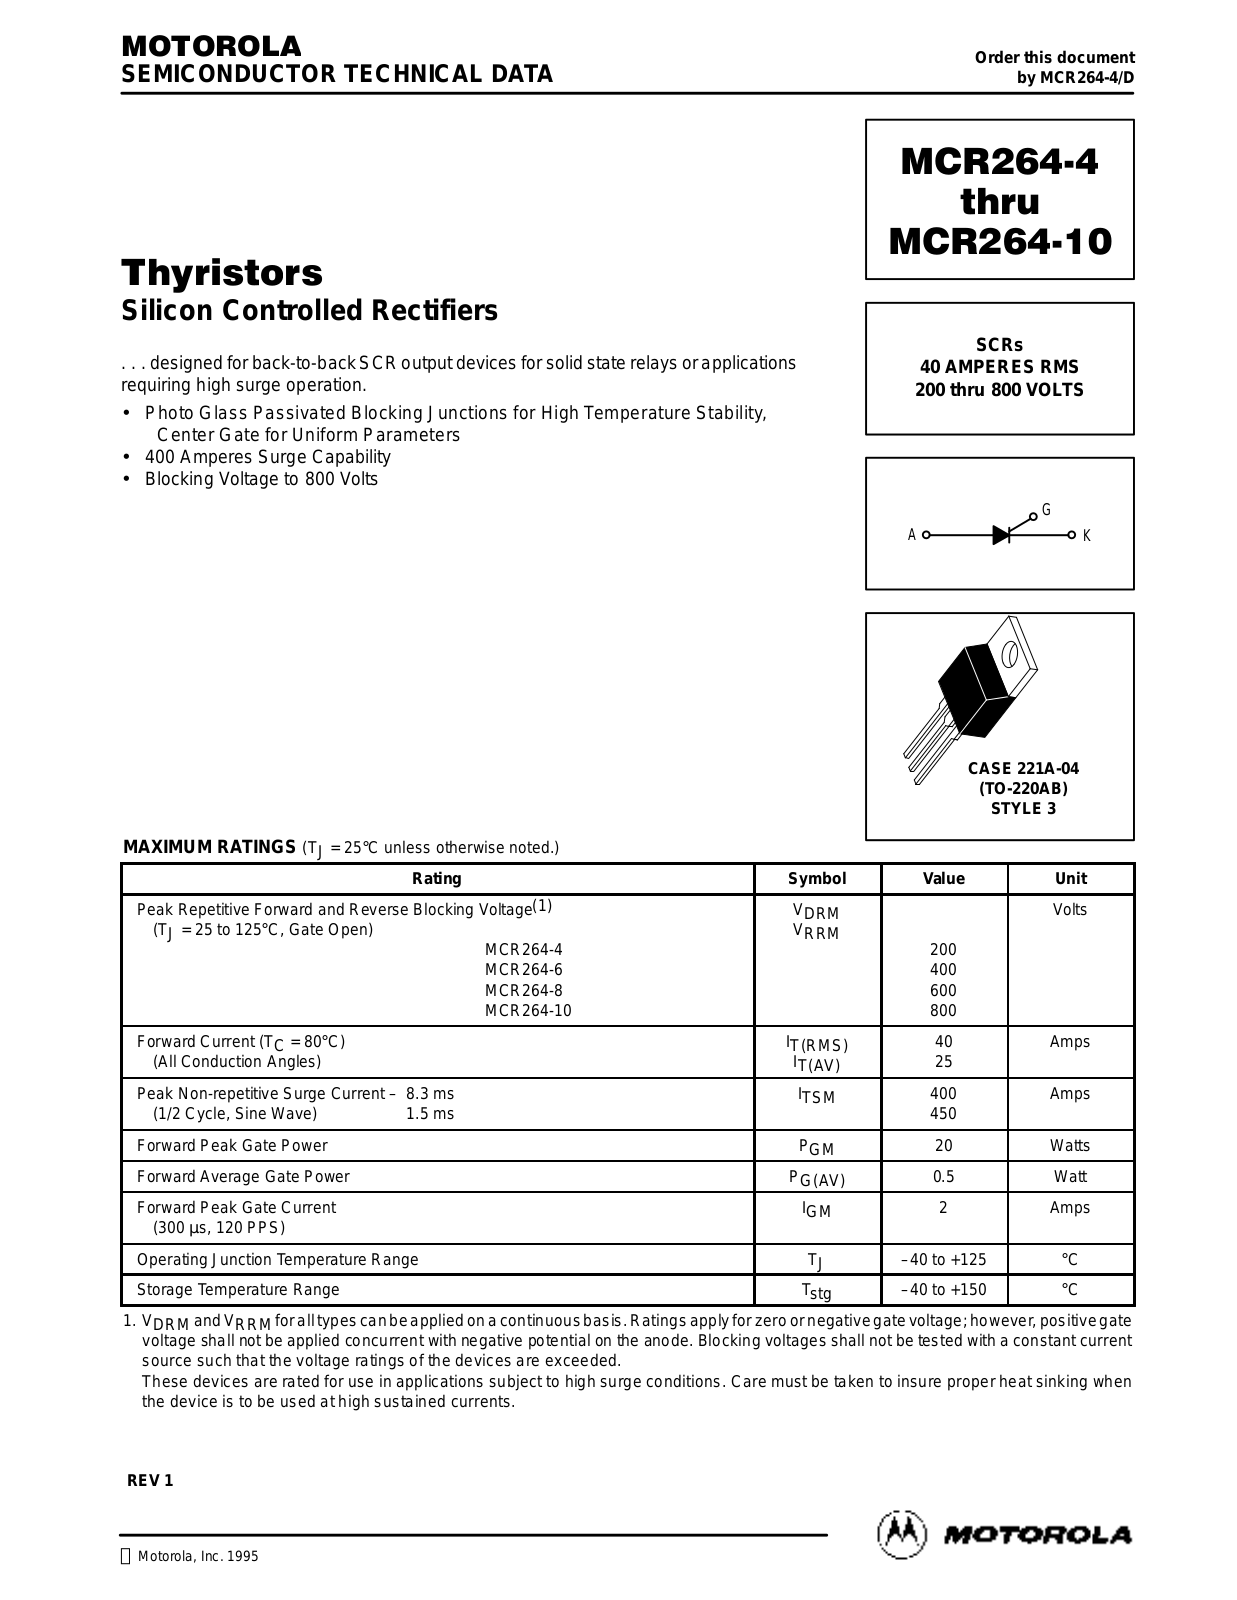 Motorola MCR264-8, MCR264-10, MCR264-4, MCR264-6 Datasheet